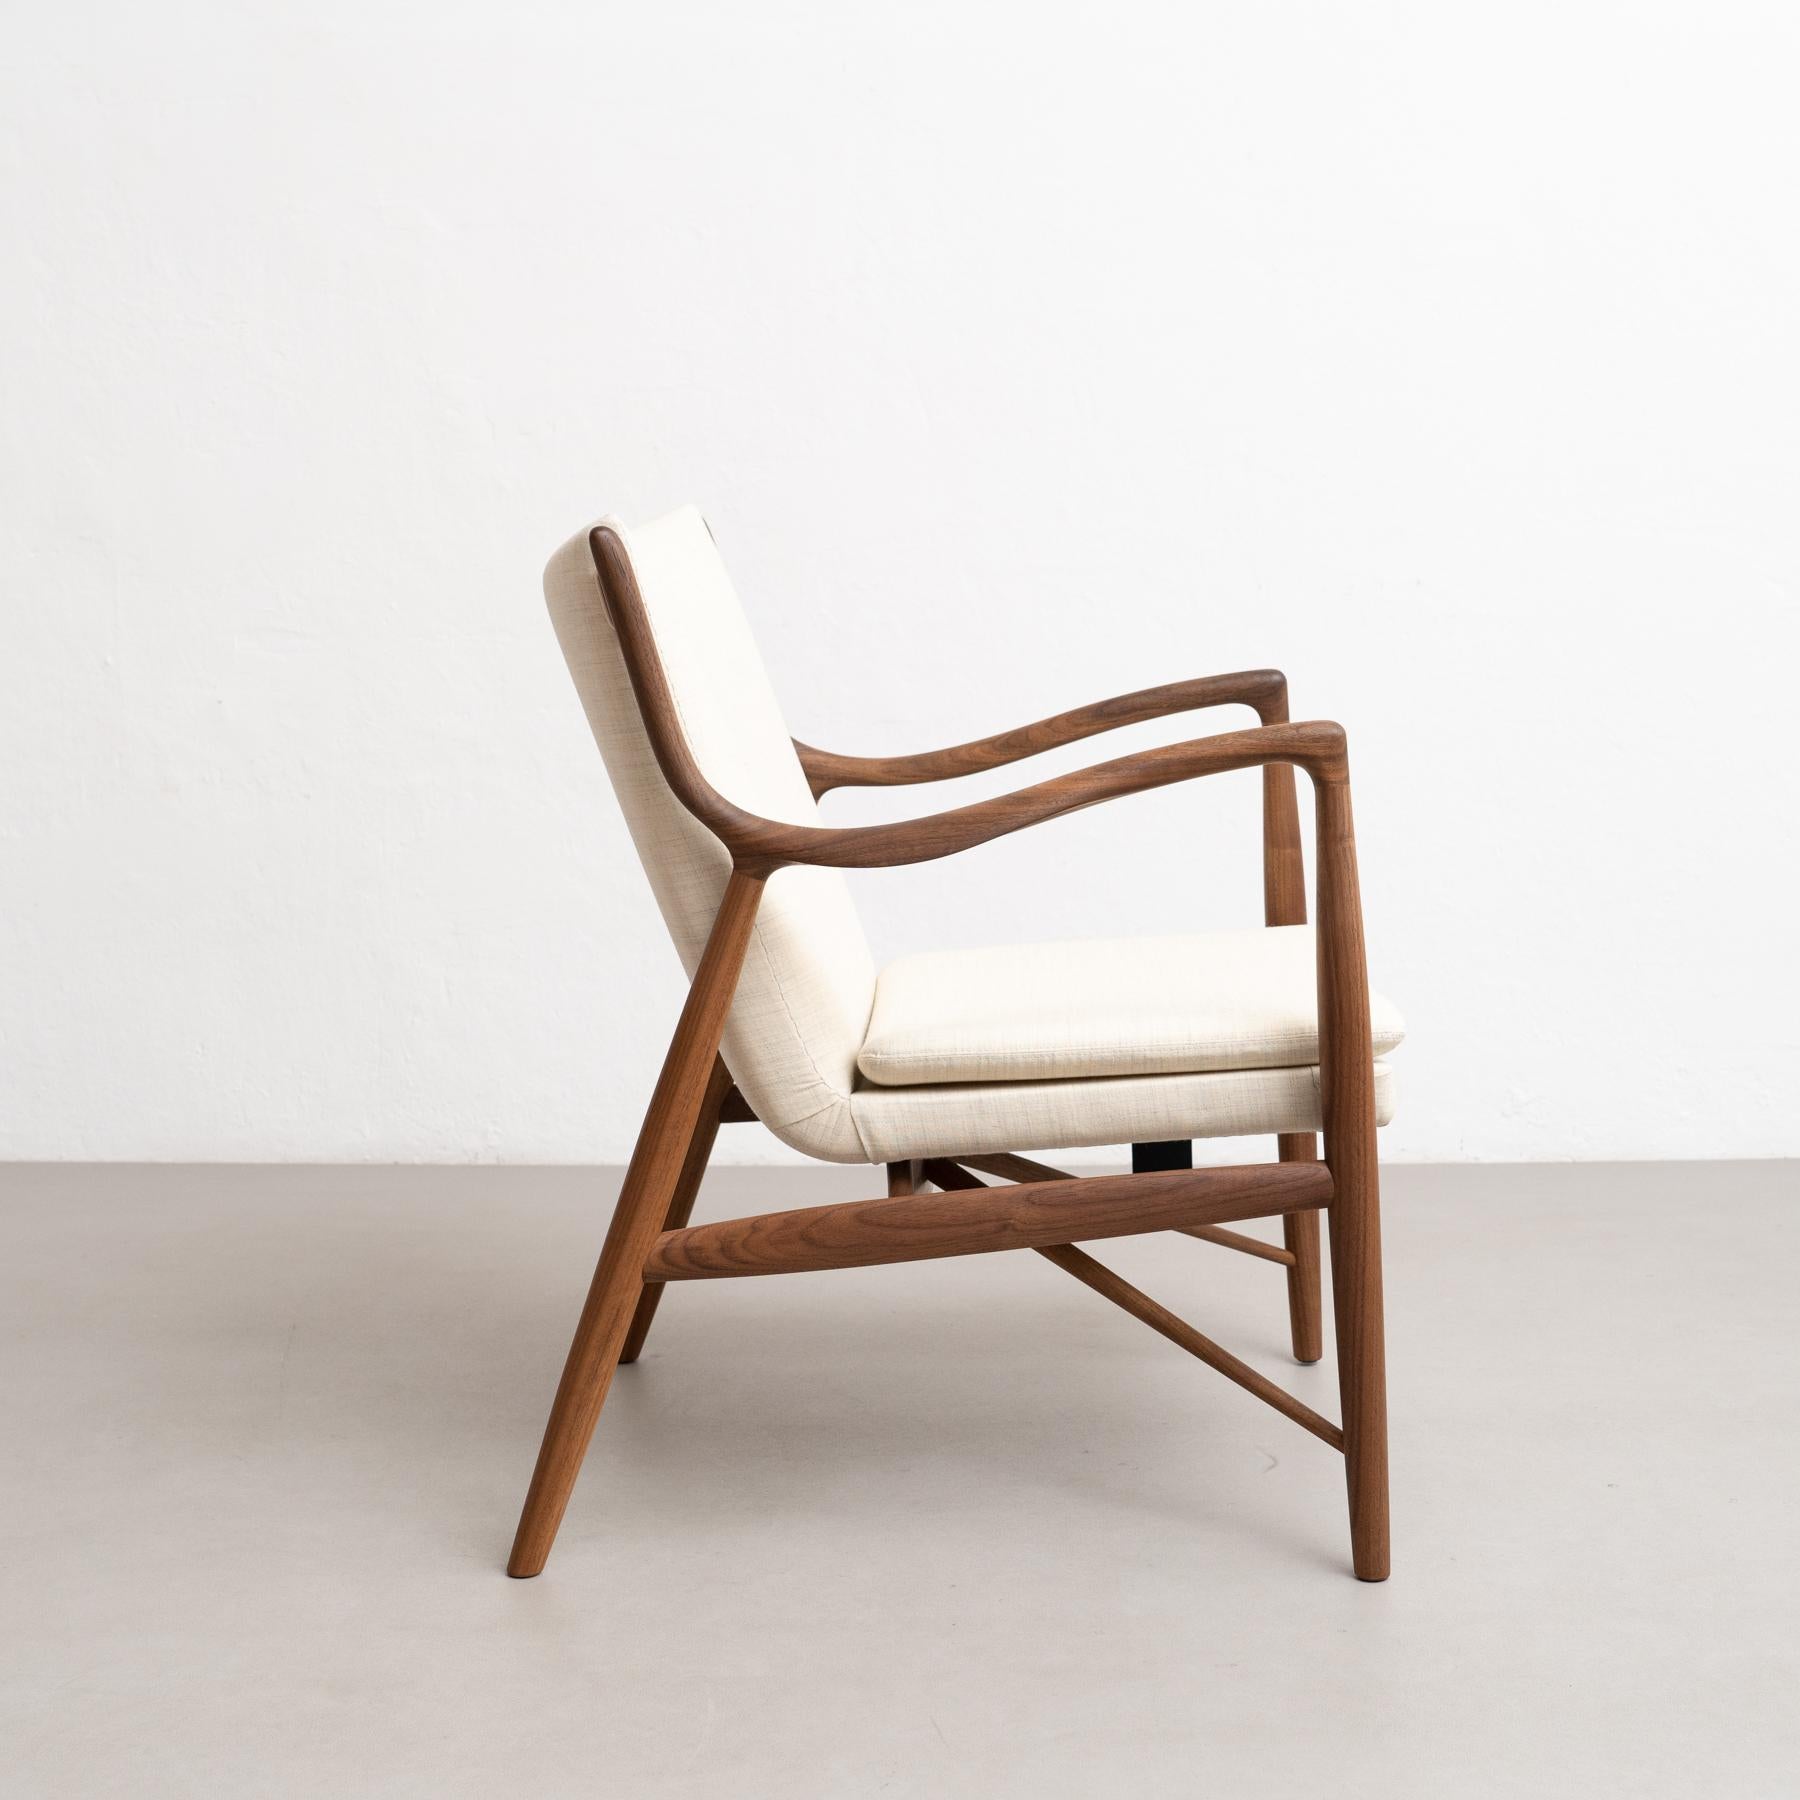 Danish Finn Juhl 45 Chair, Wood and Fabric